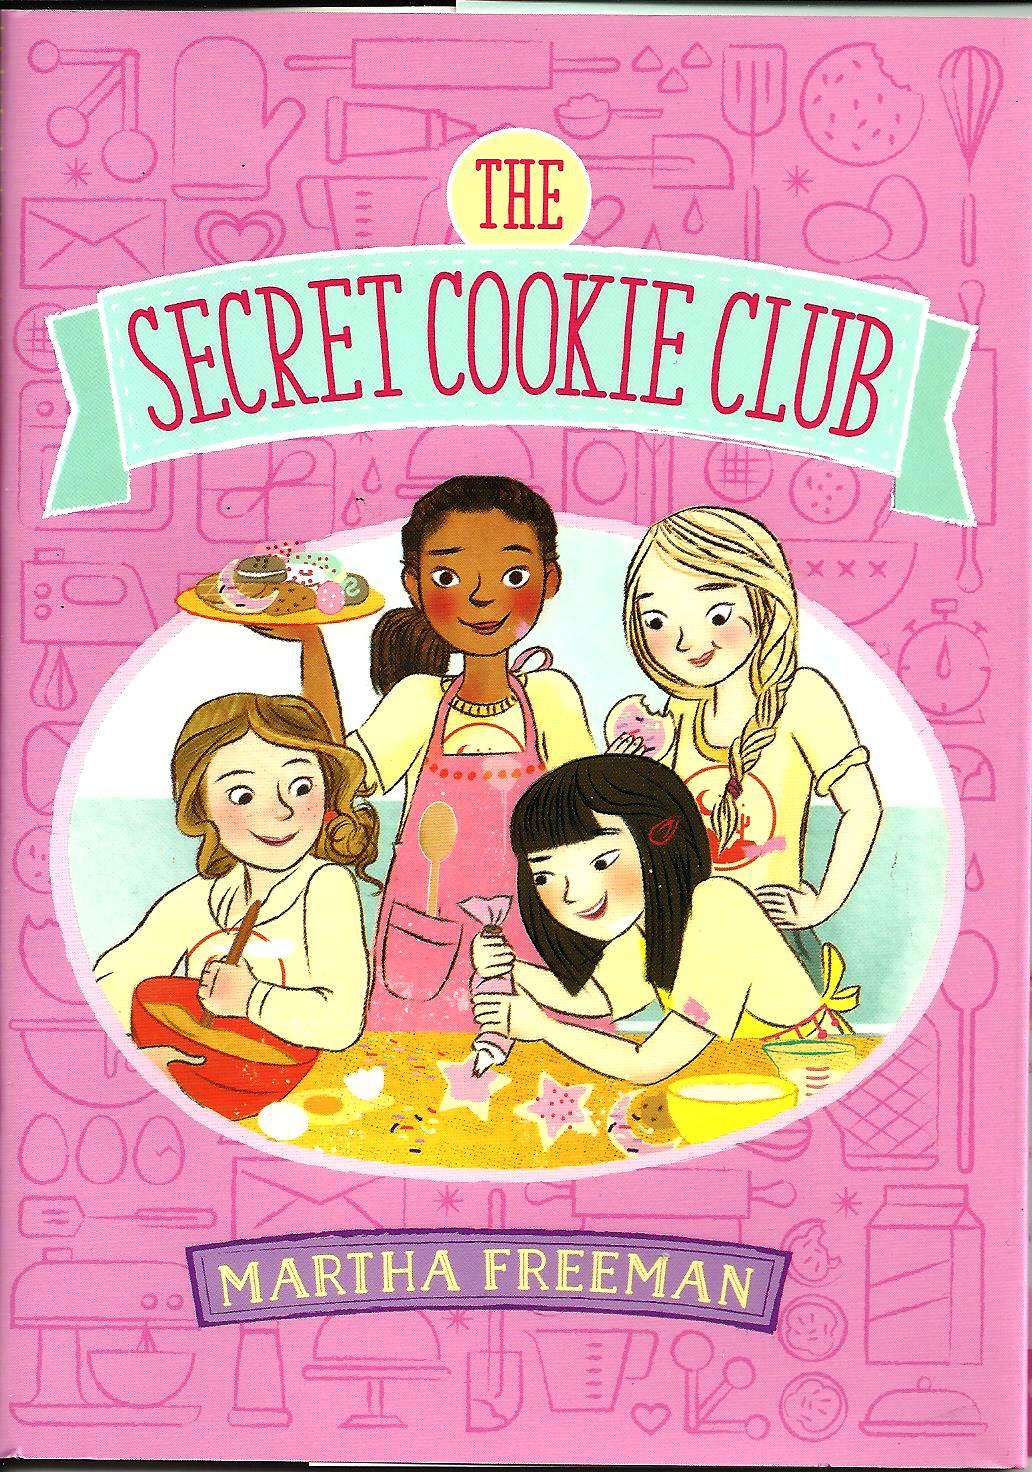 The Secret Cookie Club by Martha Freeman